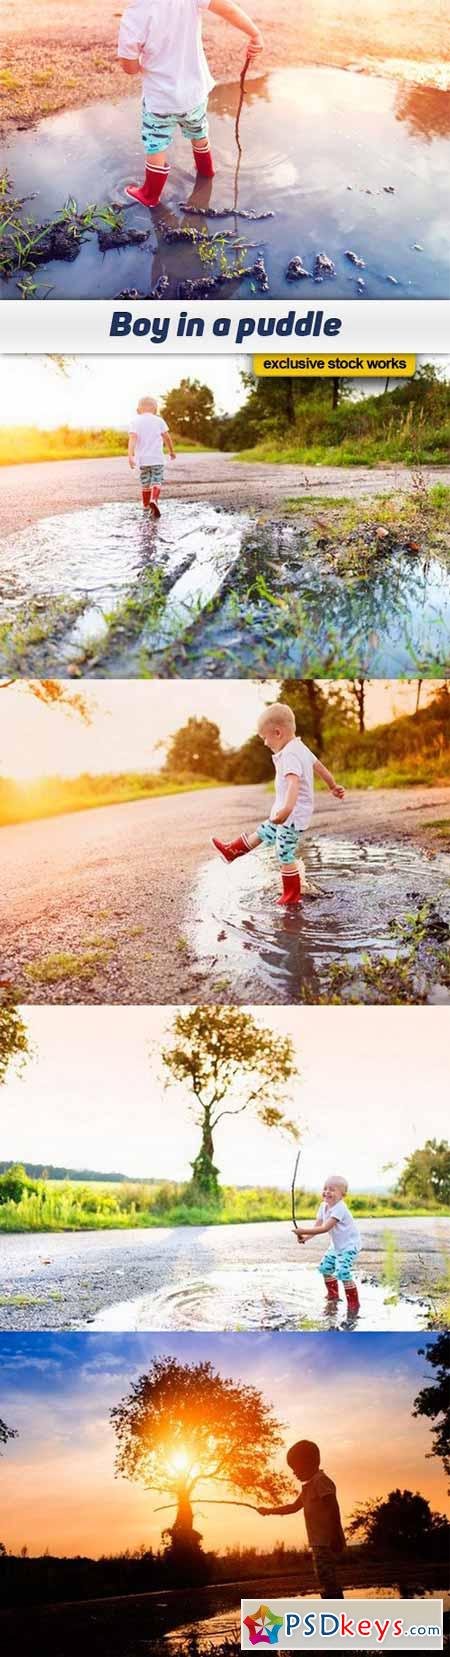 Boy in a puddle - 5 UHQ JPEG